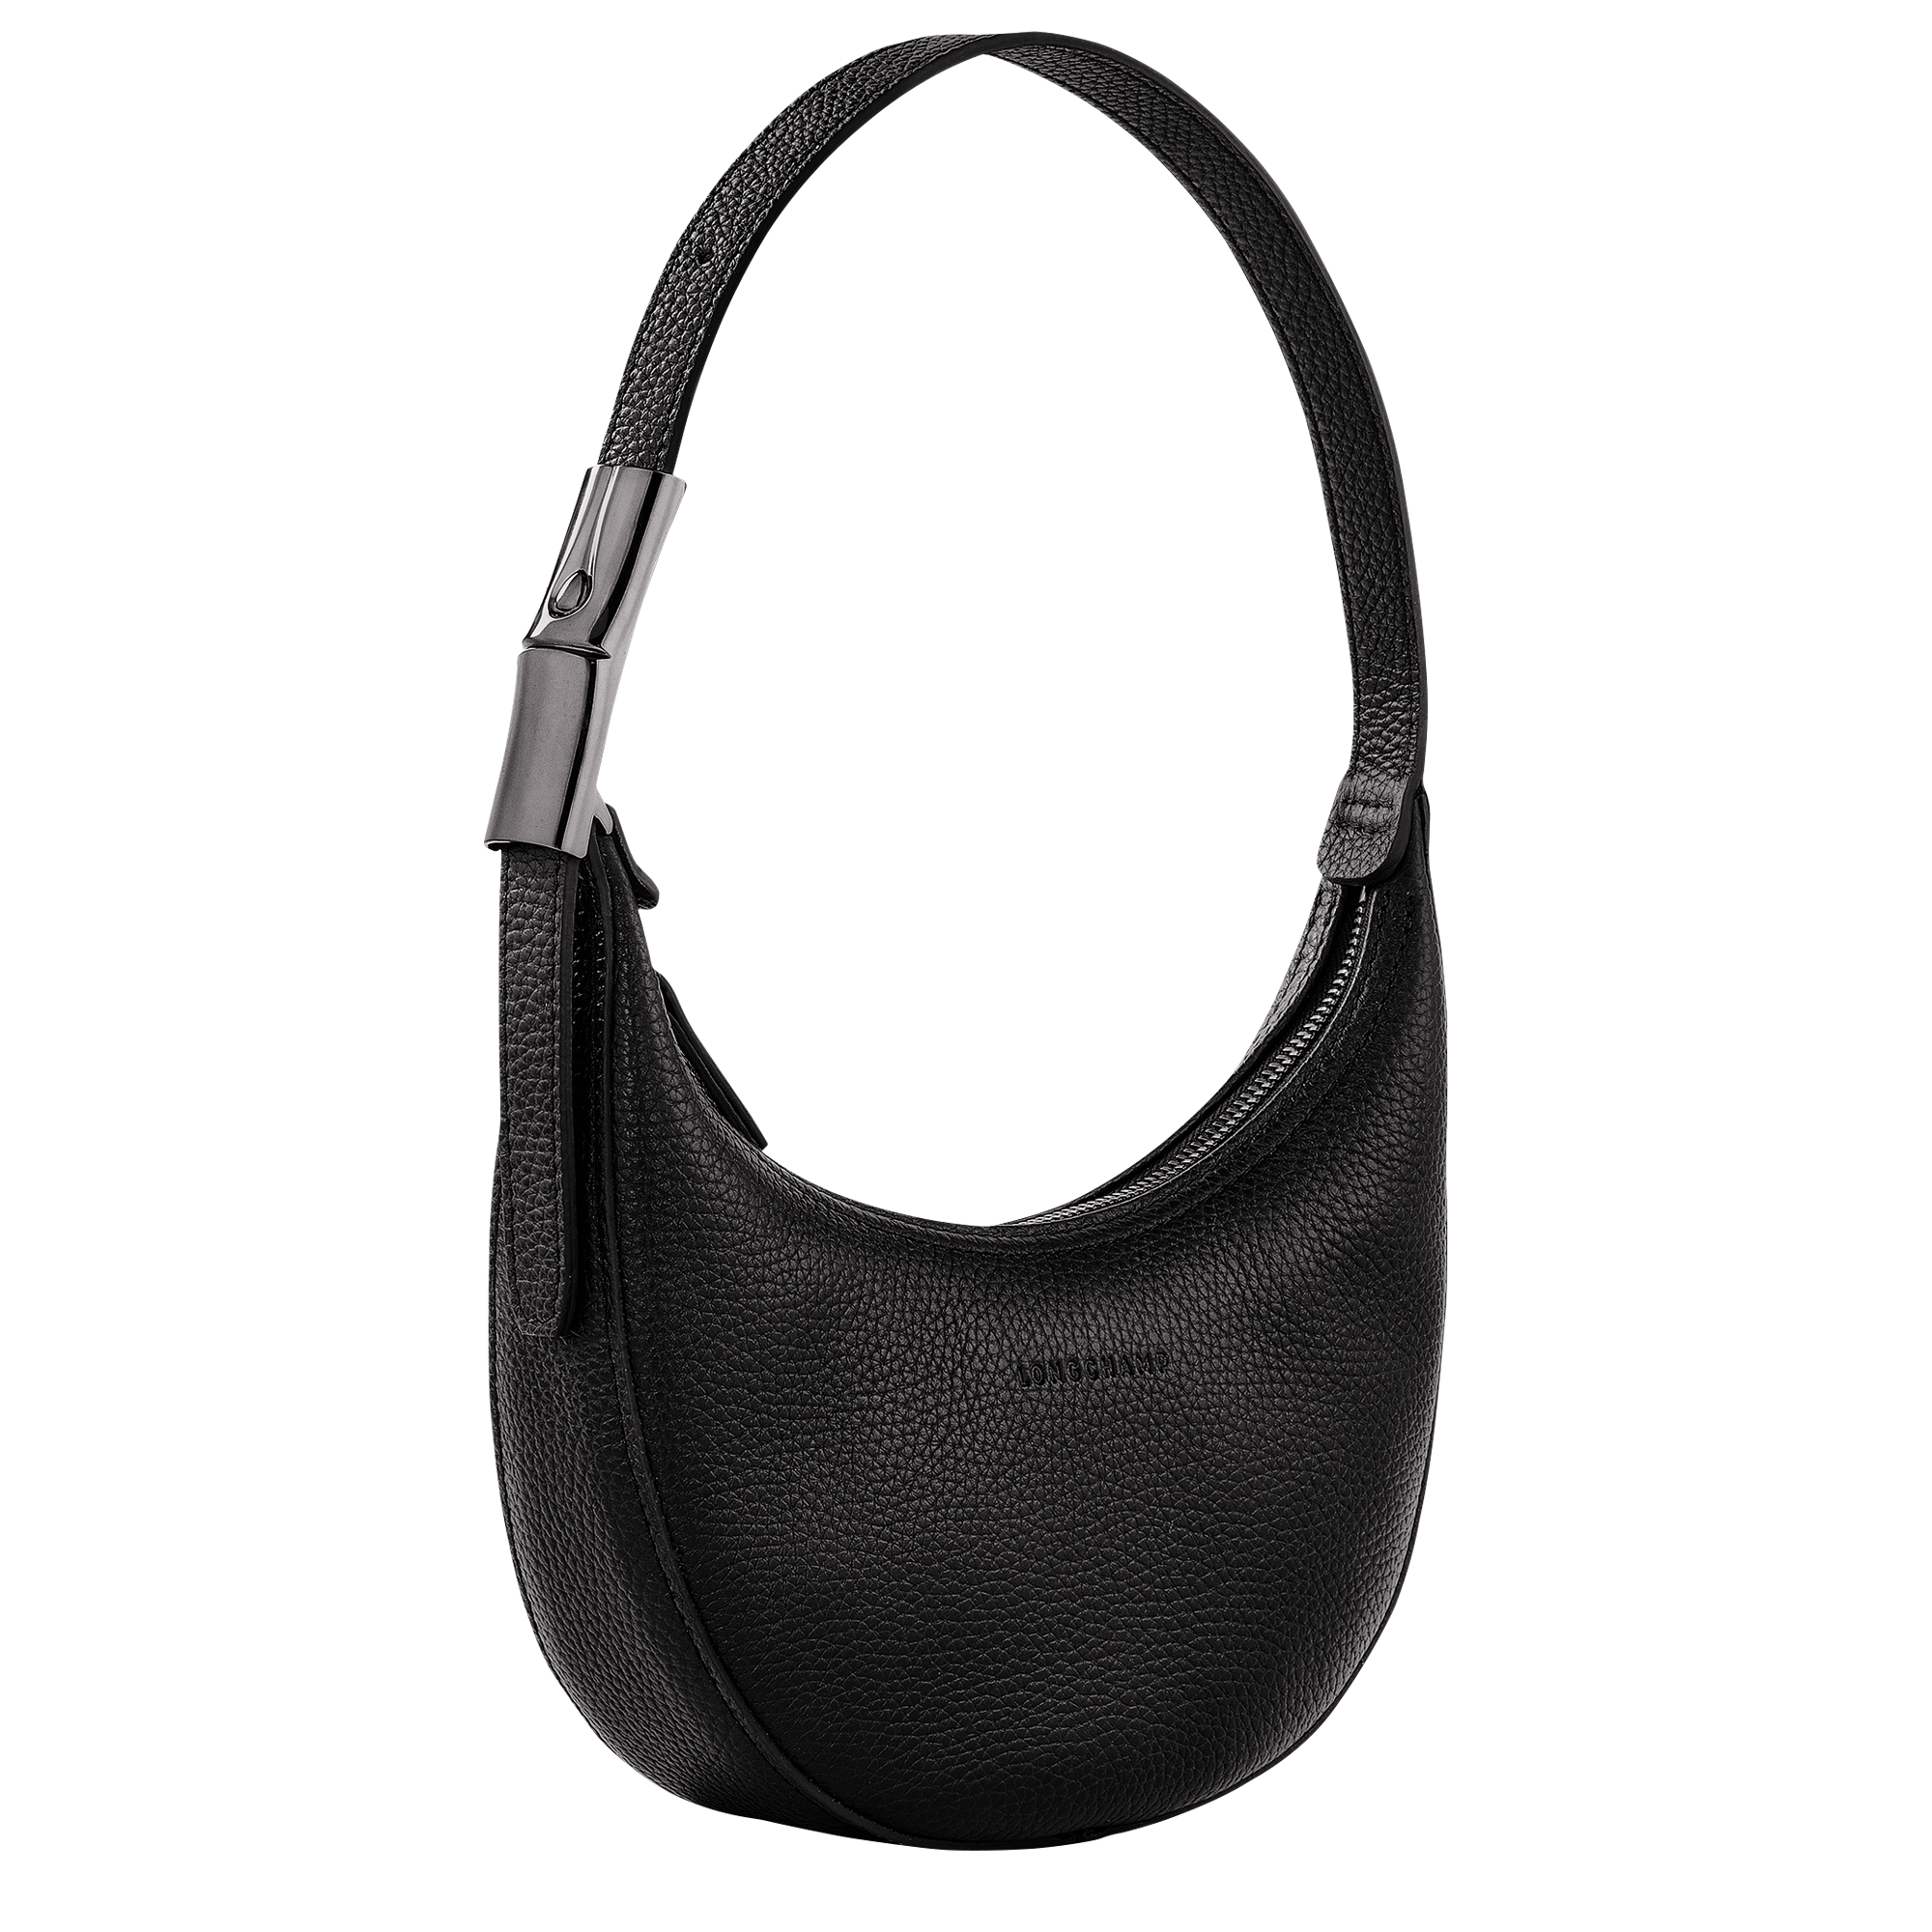 Longchamp Roseau Hobo Bag in Gray